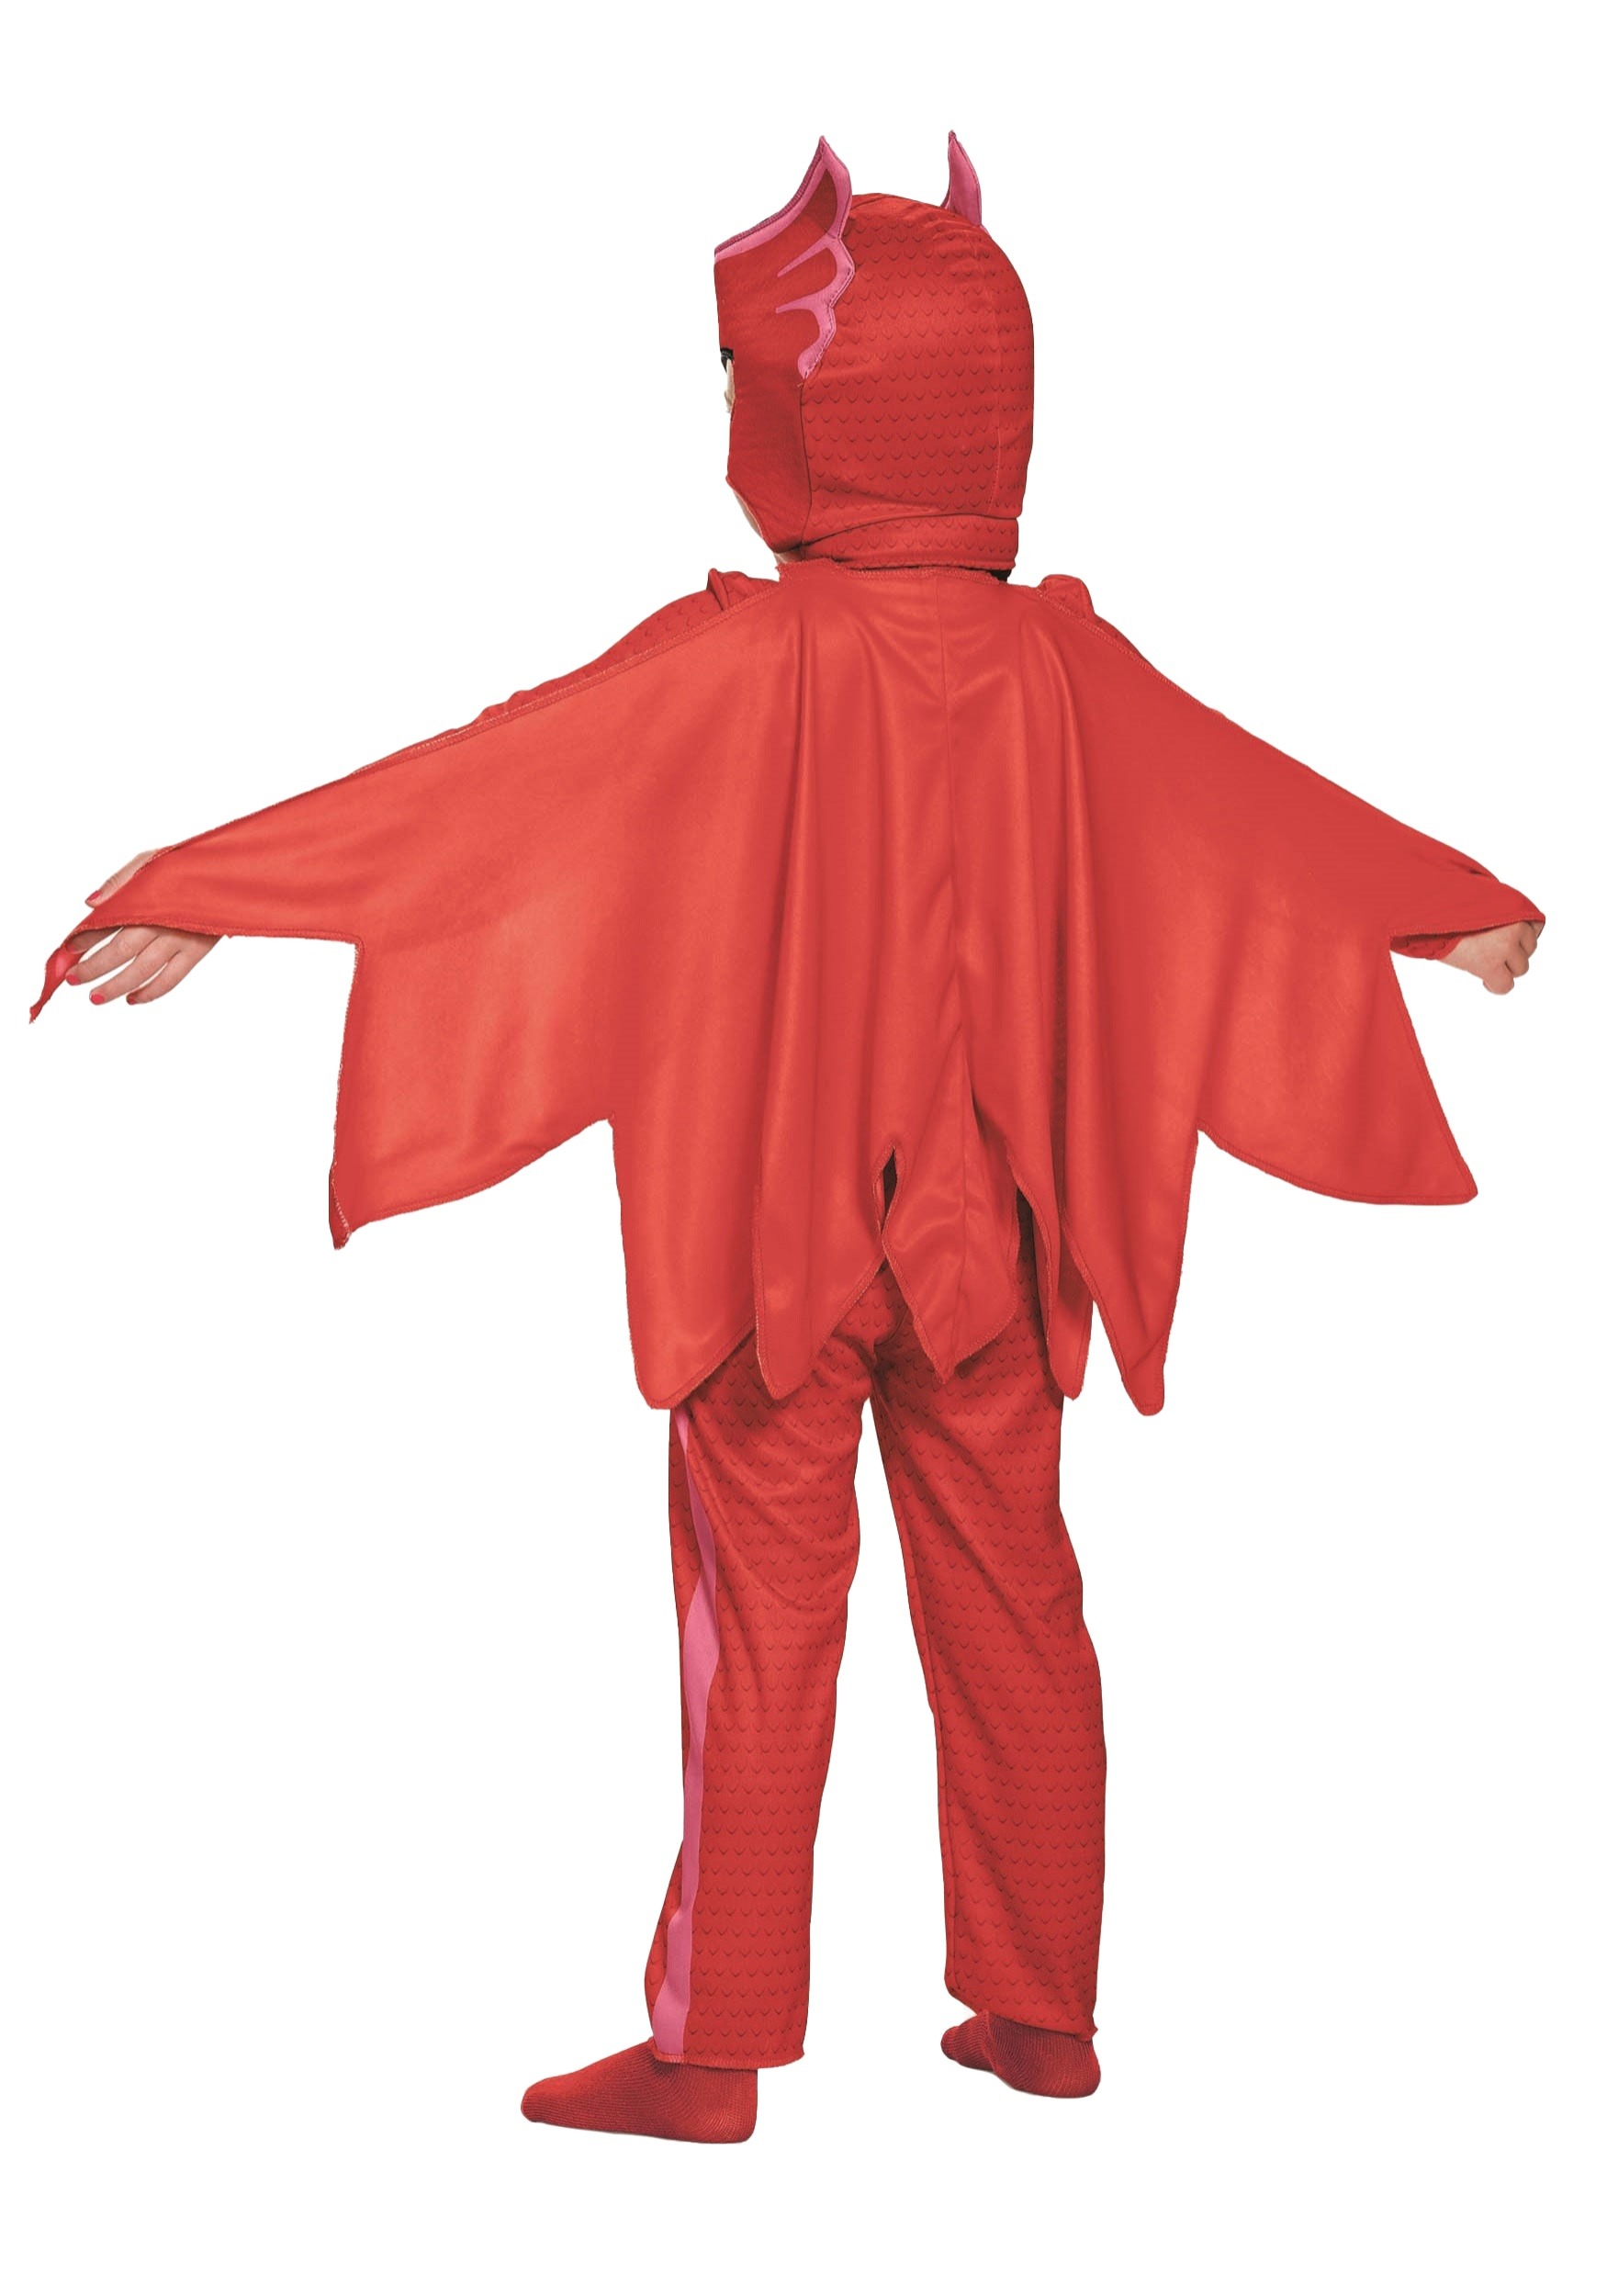 Owlette Classic PJ Masks Disney Kids Fancy Dress Halloween Toddler Child Costume 